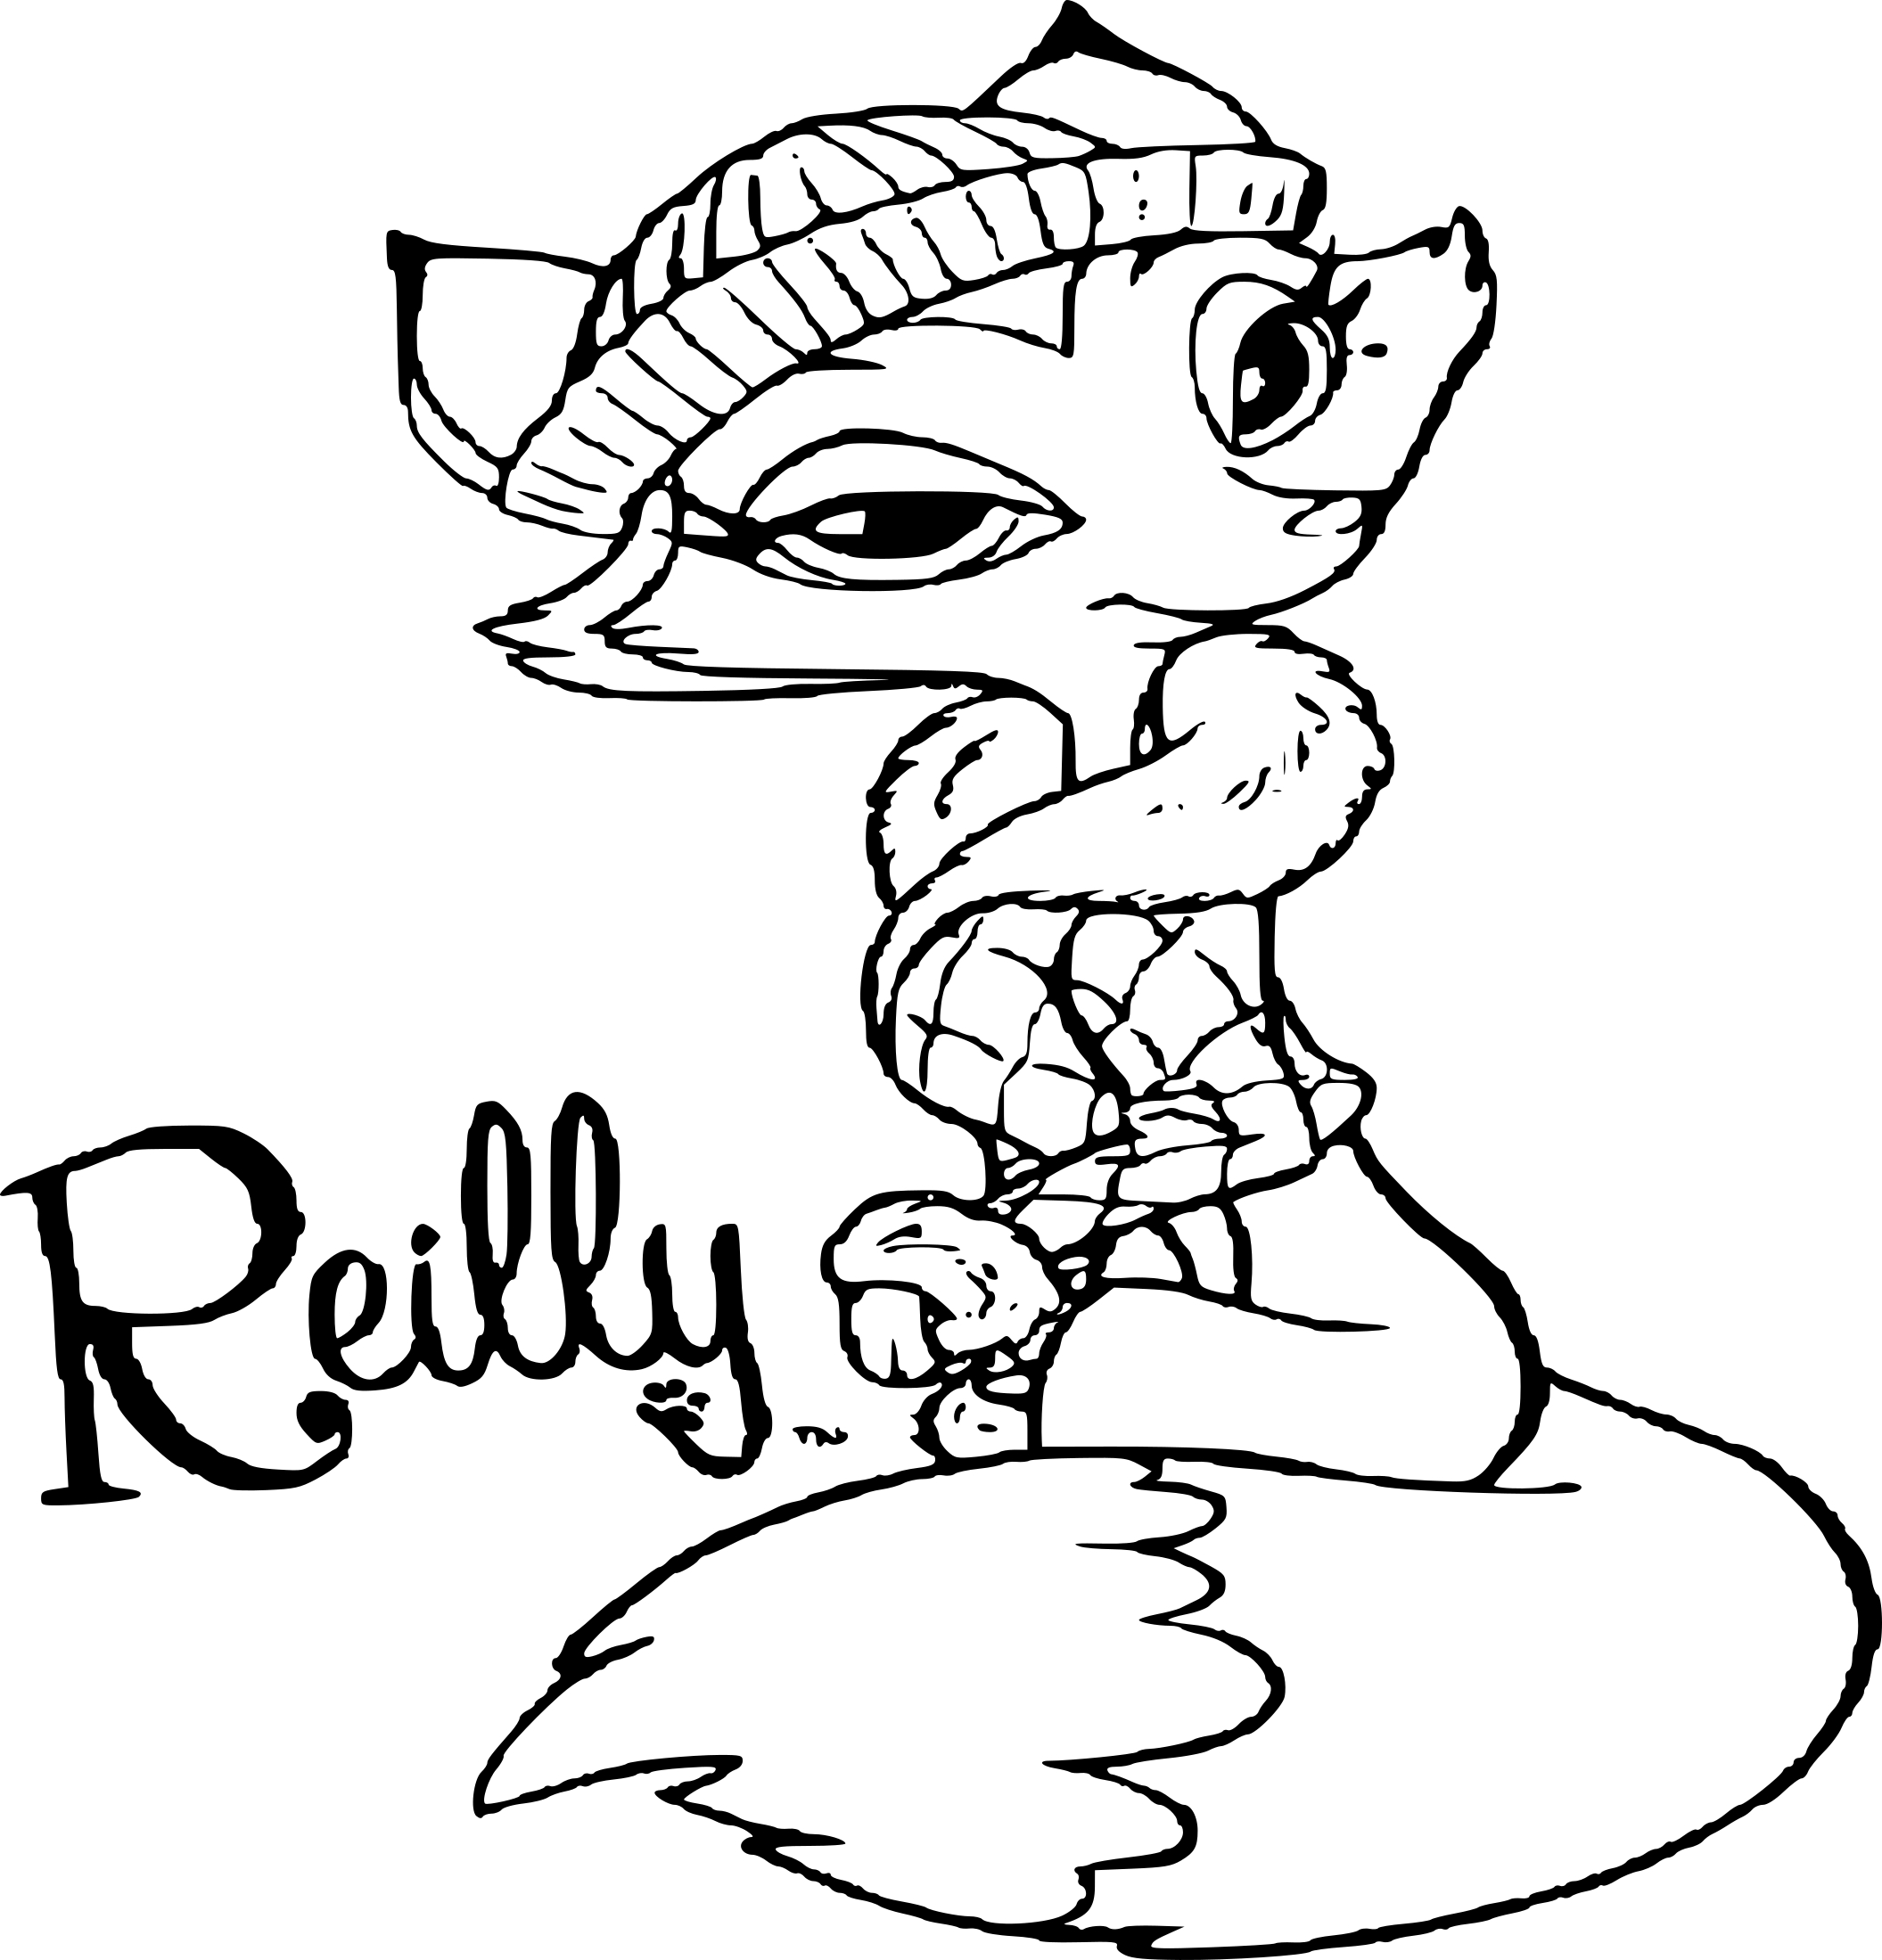 Bratz Petz Reilly coloring page